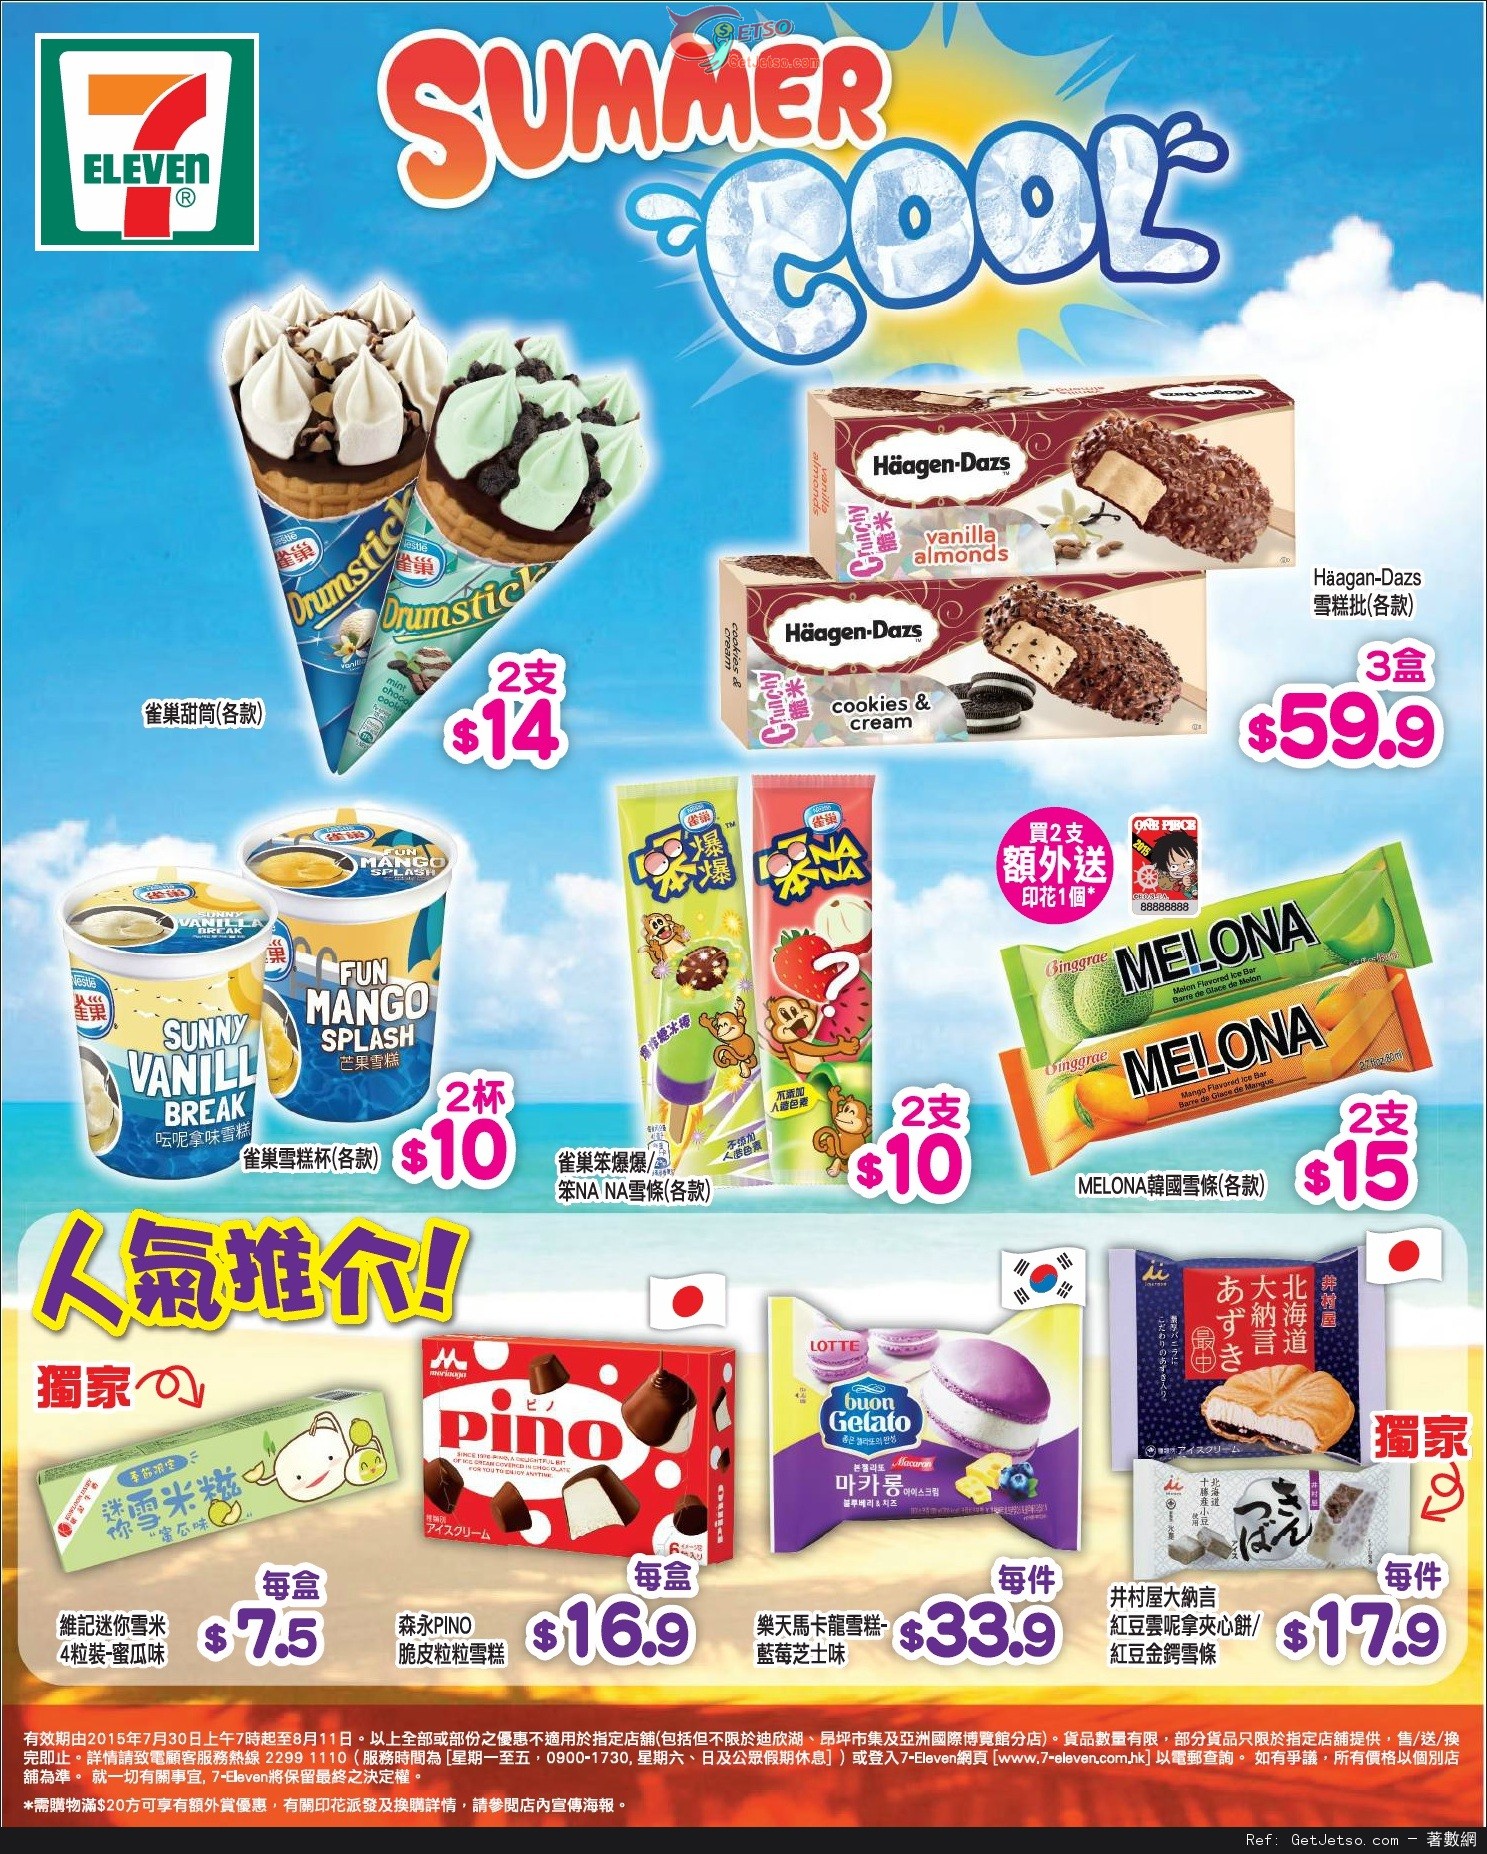 7-Eleven SUMMER COOL雪糕產品購買優惠(至15年8月11日)圖片1